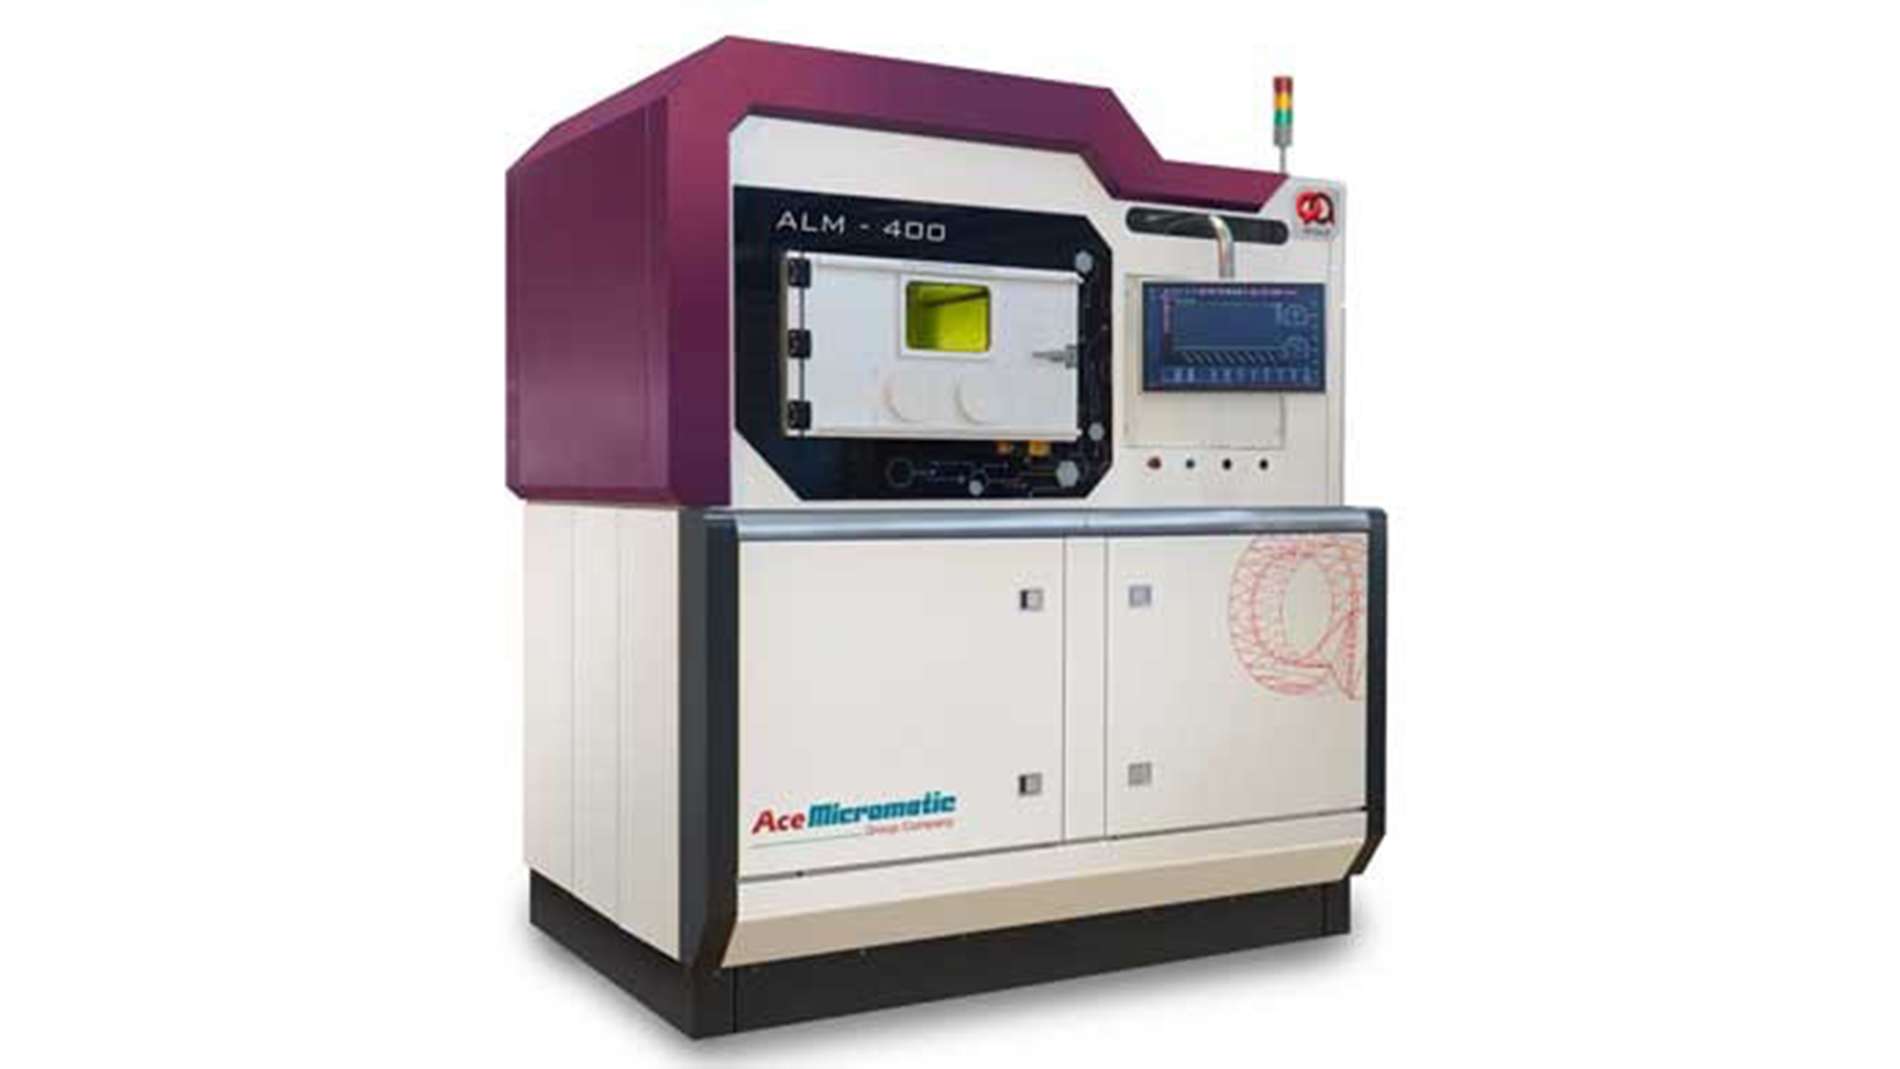 ALM-400 metal AM machine, Image Courtesy: Amace Solutions